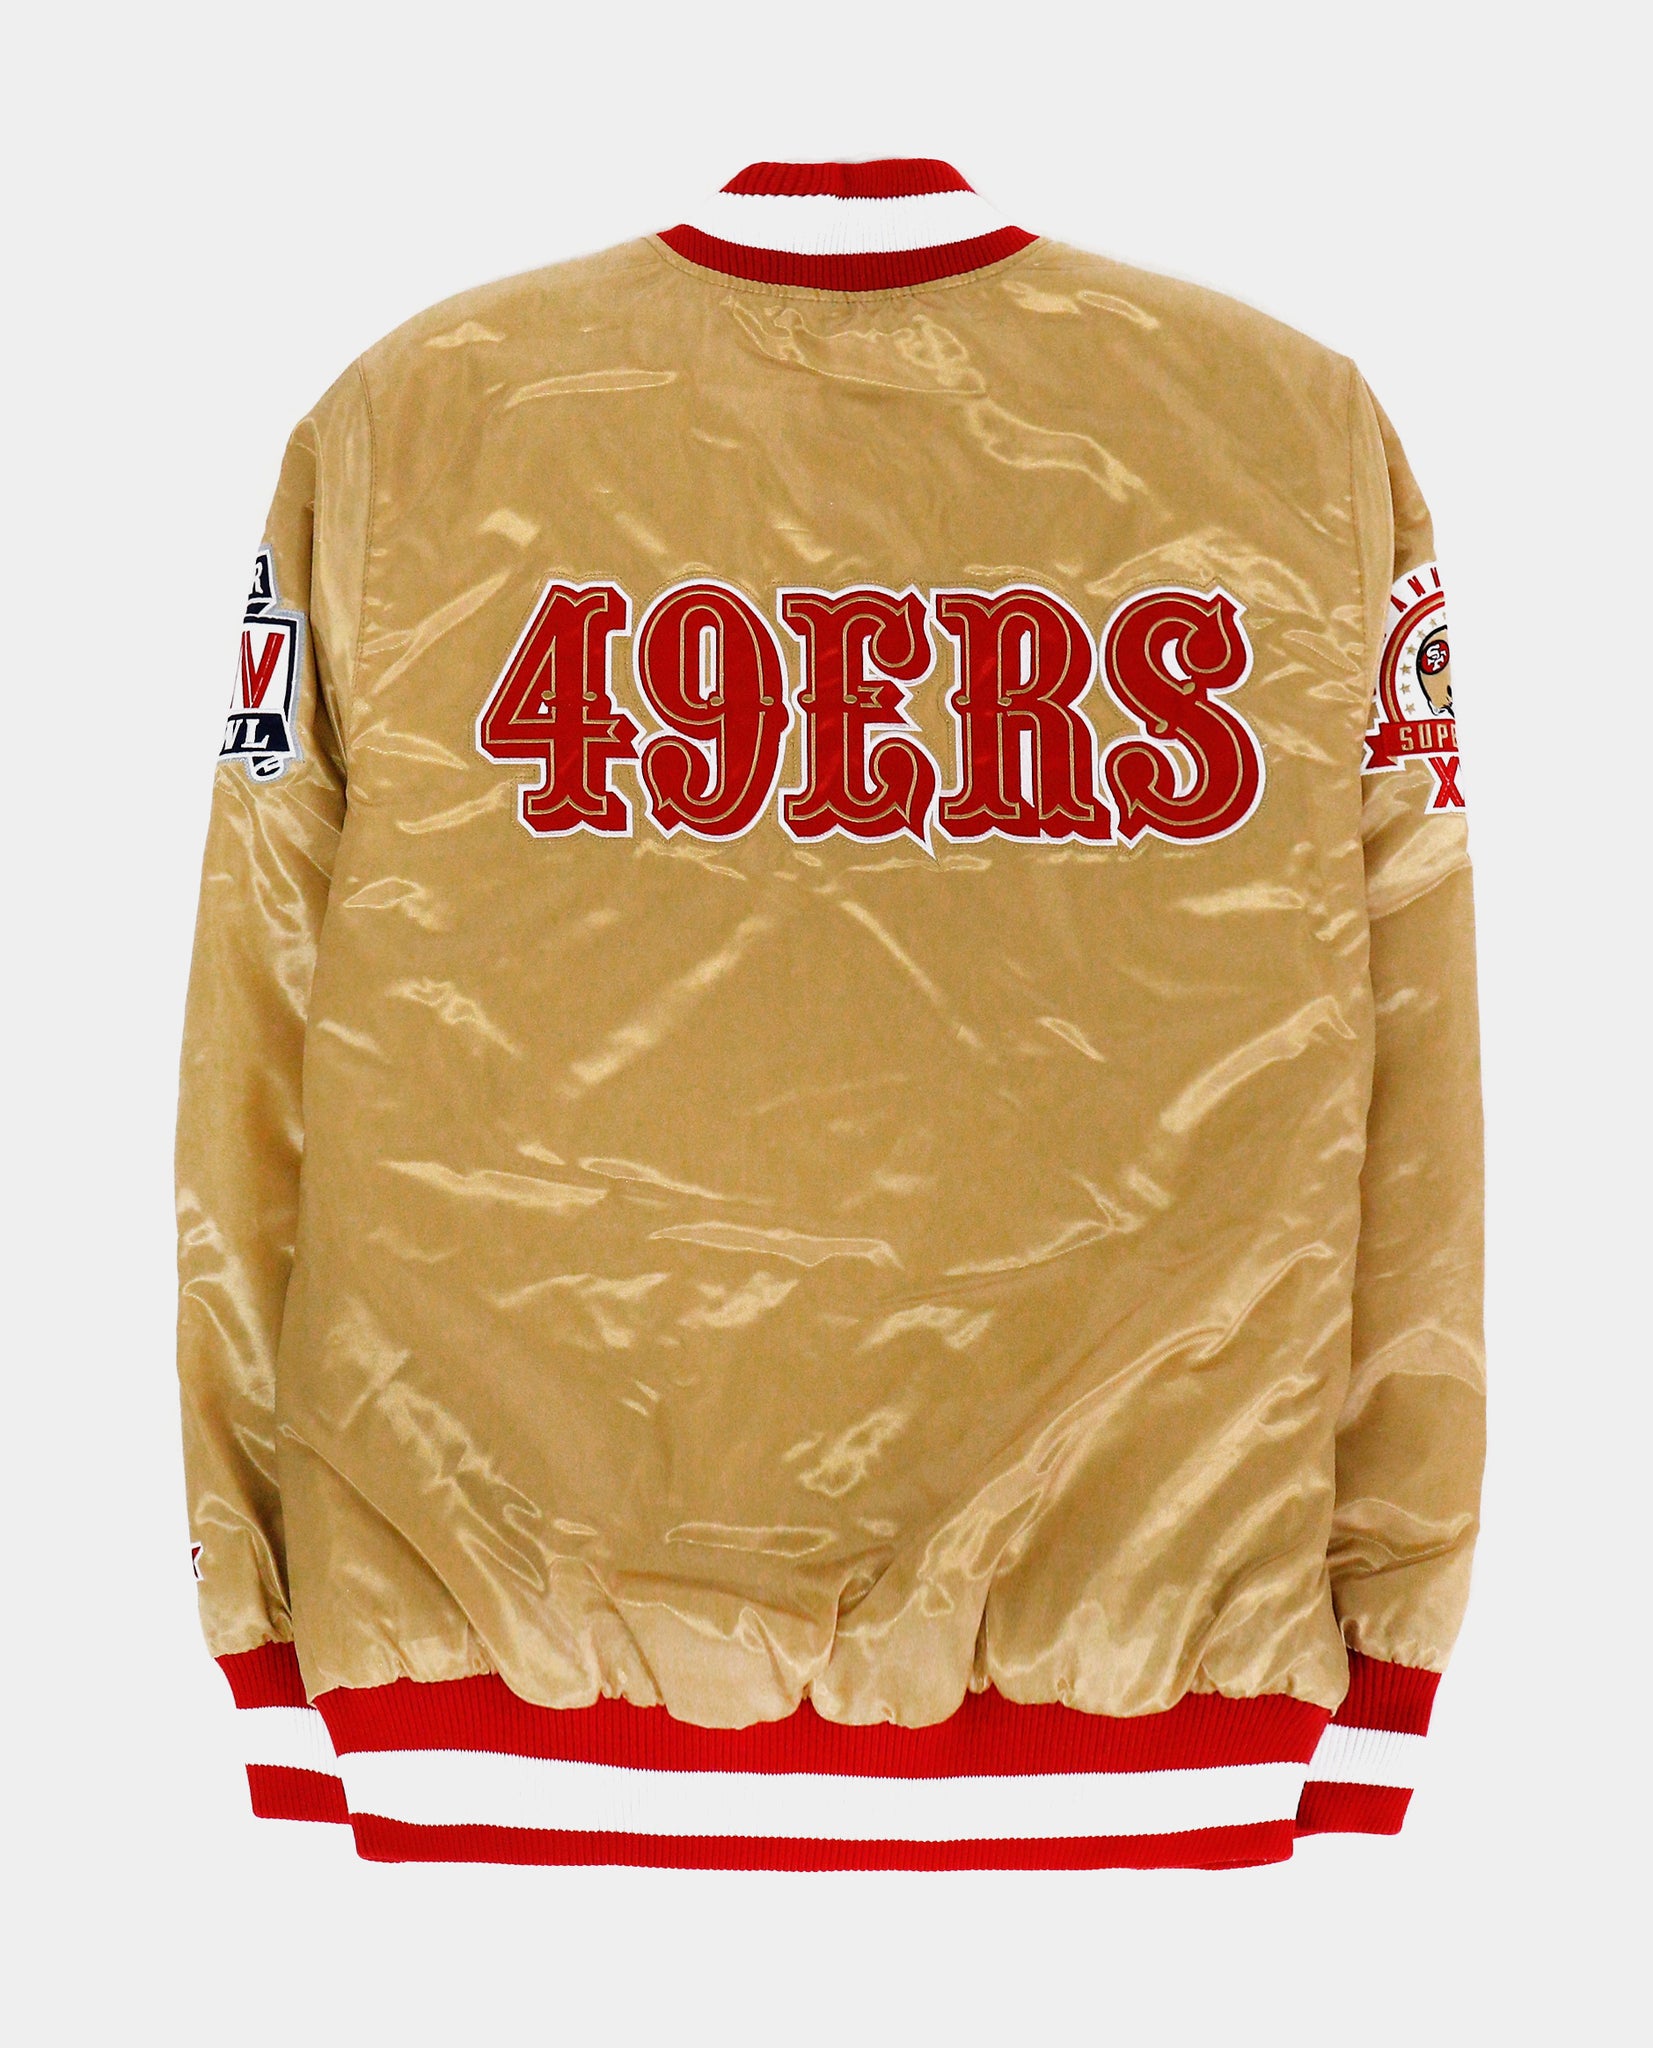 49ers varsity jacket